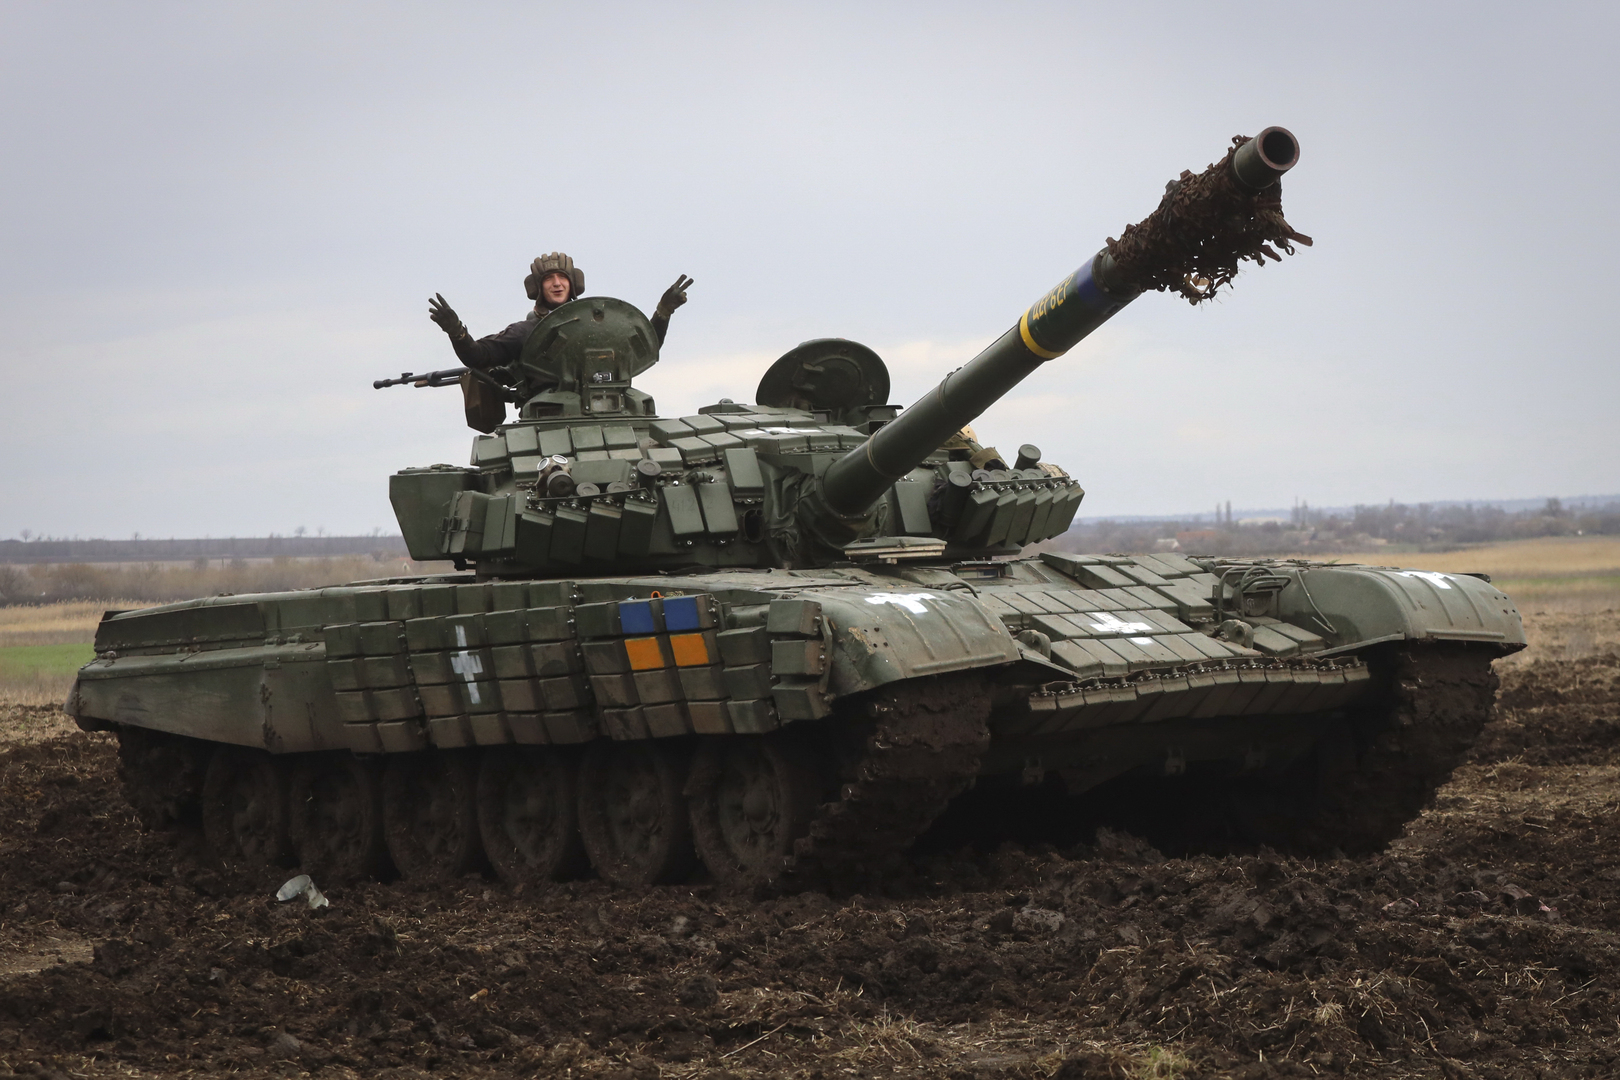 سيناتور روسي يتوقع شن قوات كييف هجومها المضاد بين مايو وأكتوبر